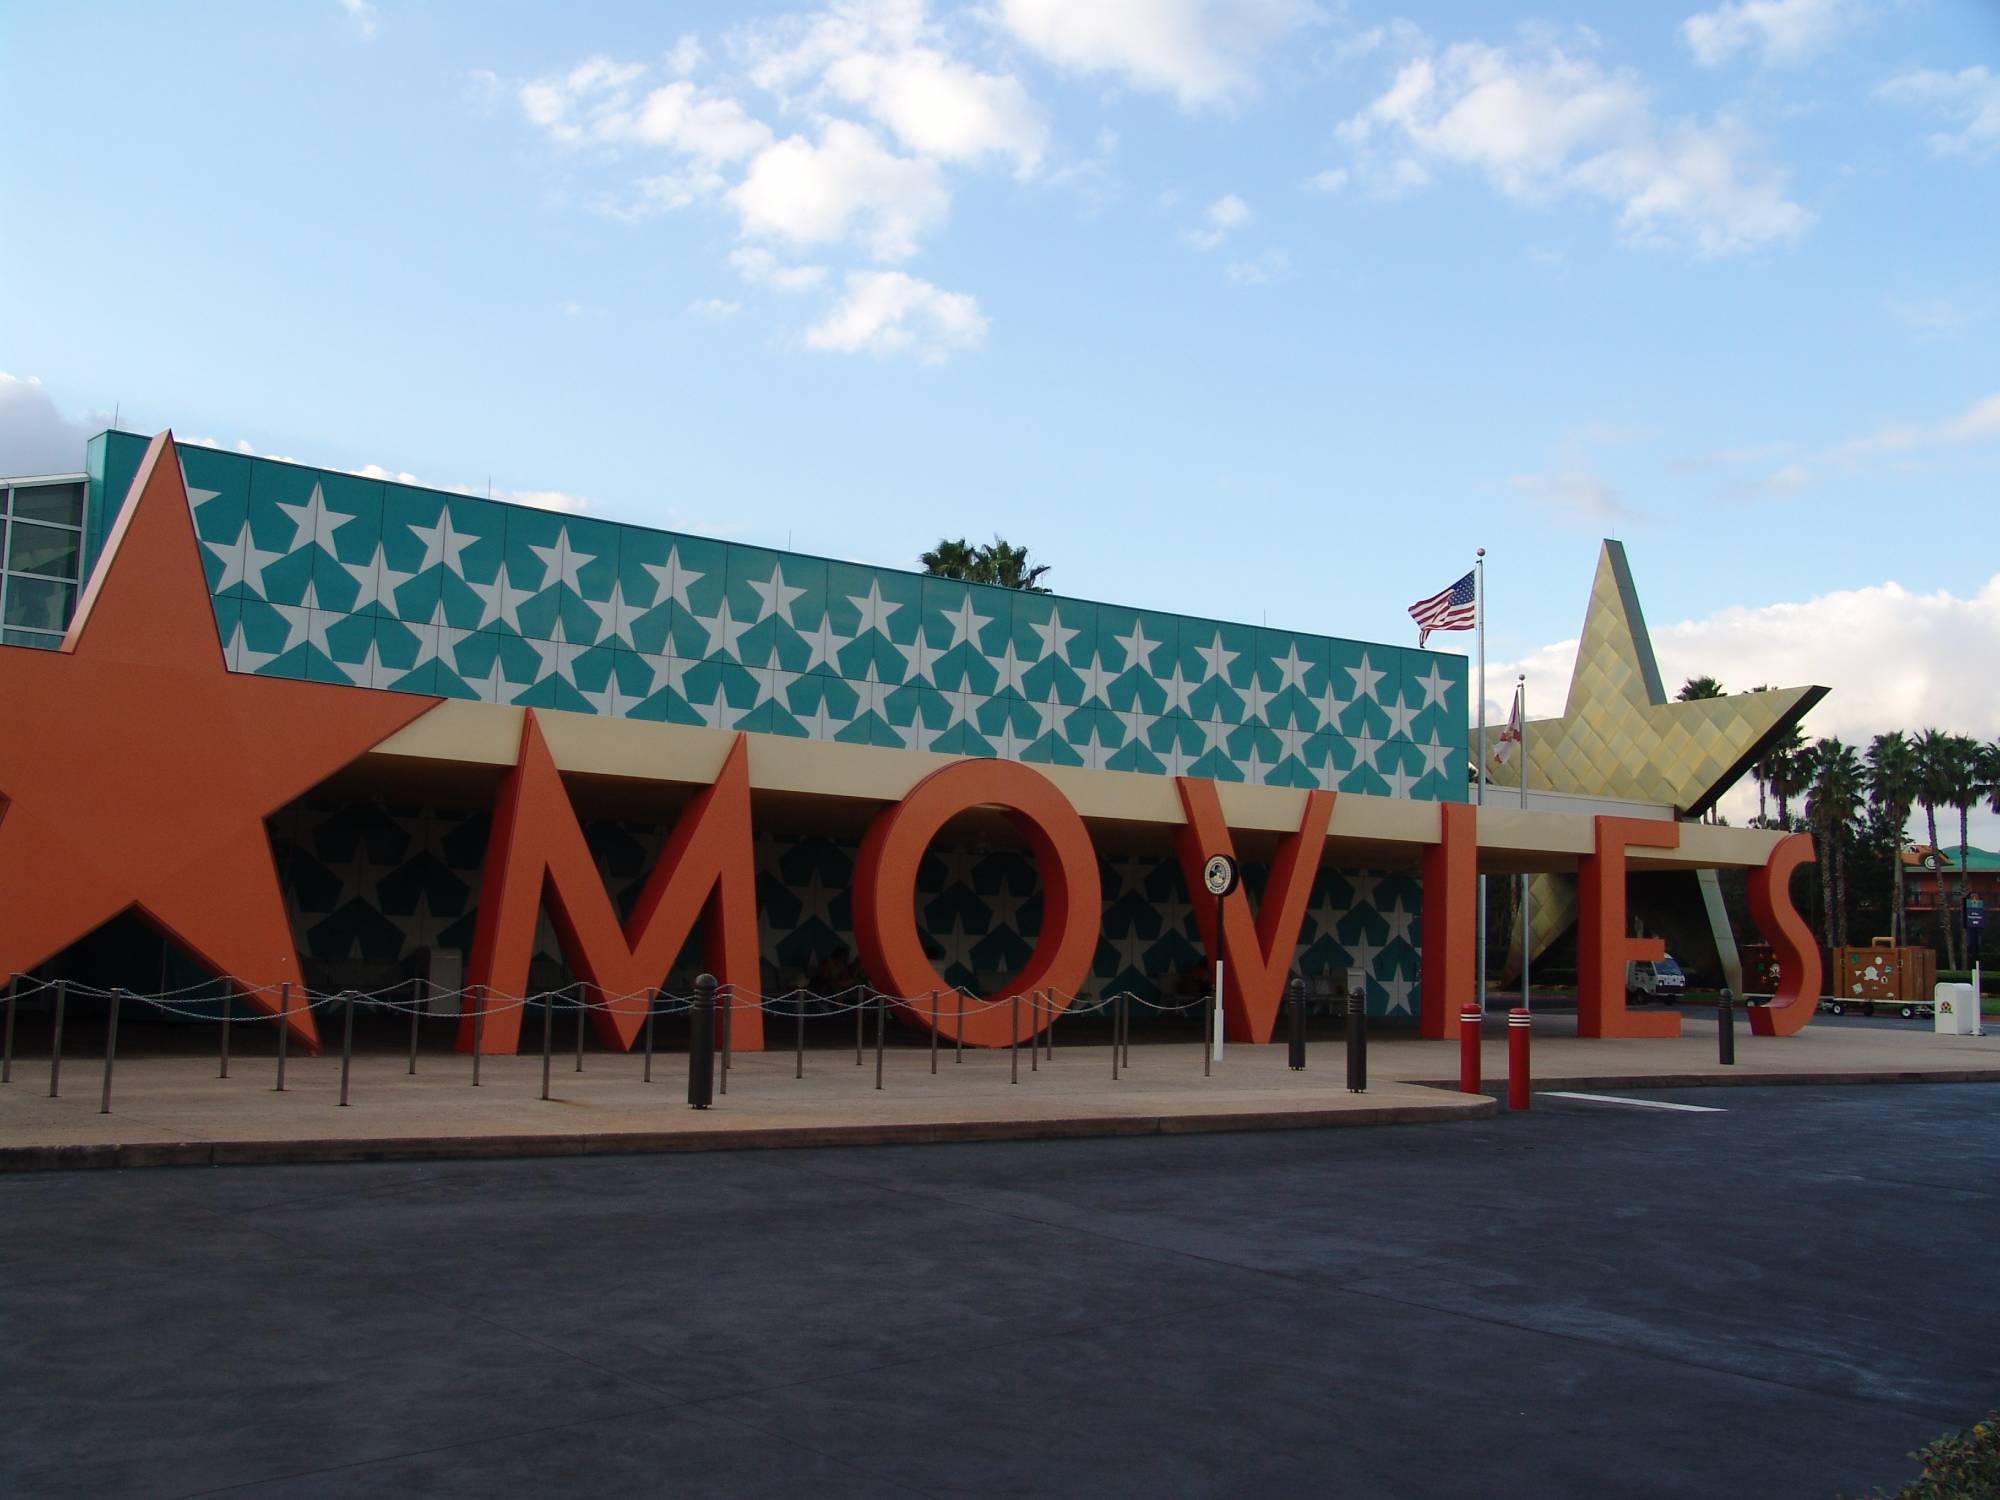 All Star Movies - Cinema Hall